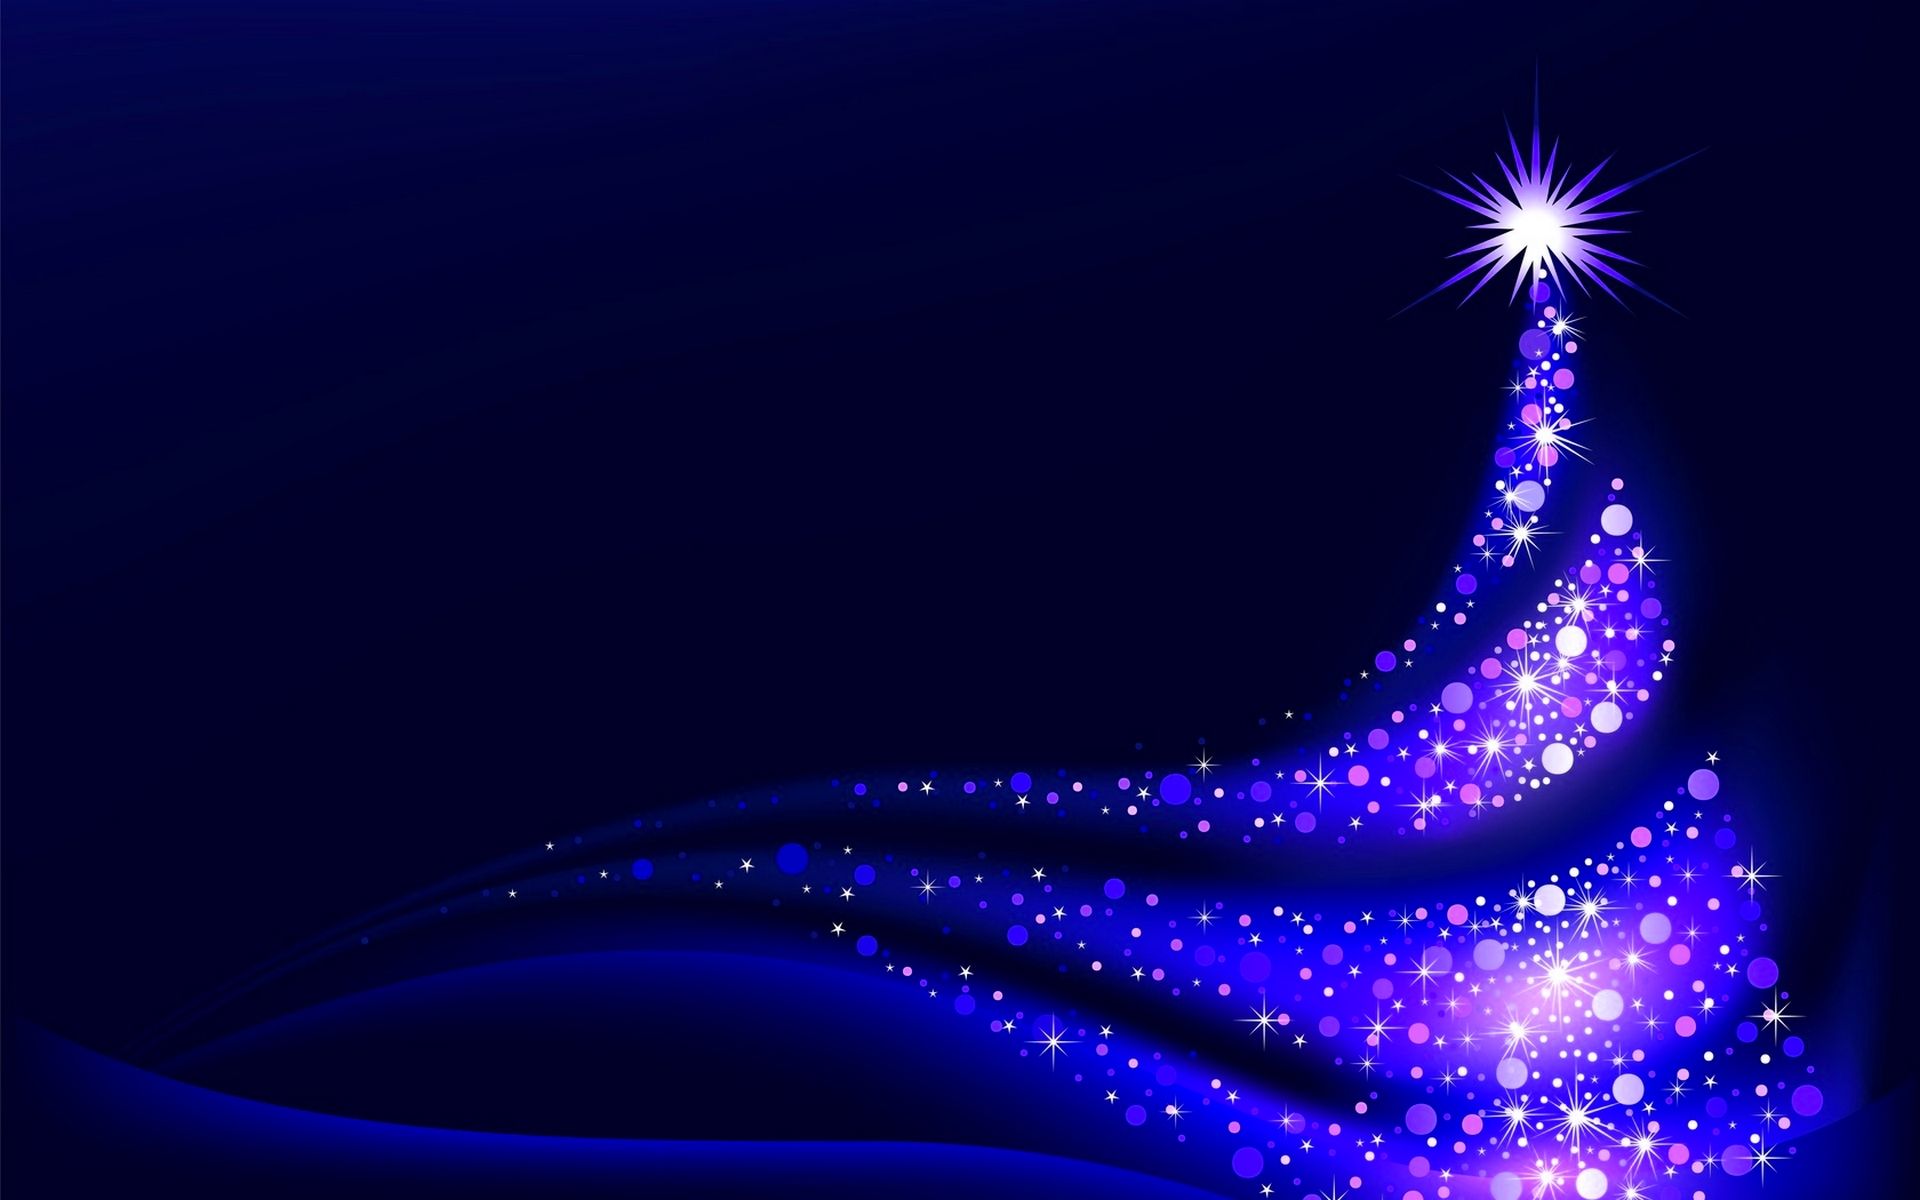 Blue light on an artistic Christmas tree